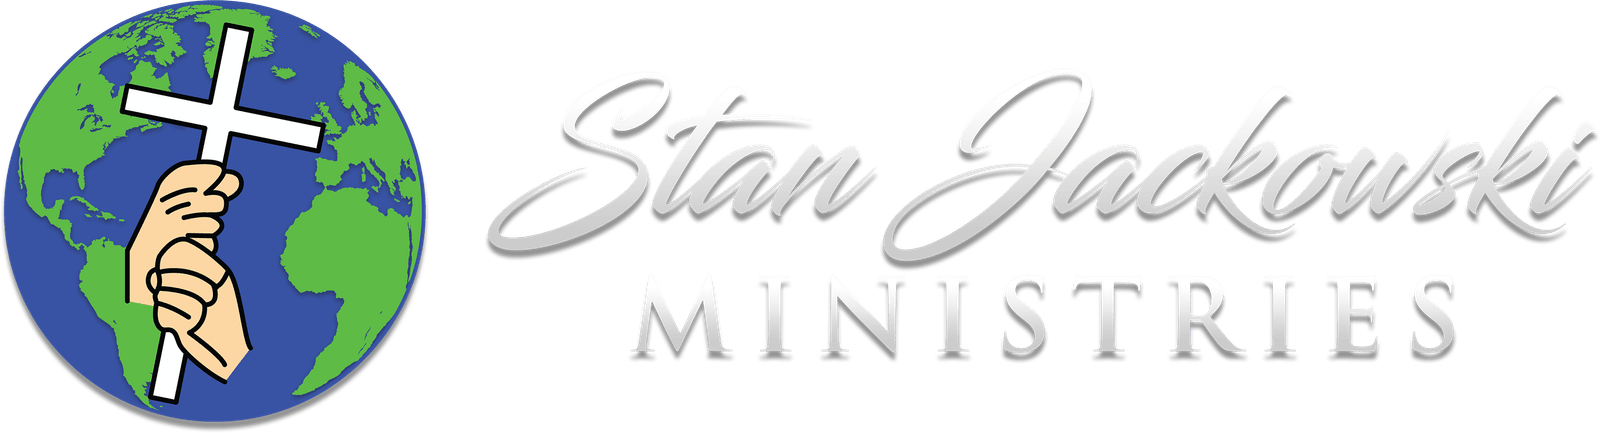 Stan Jackowski Ministries